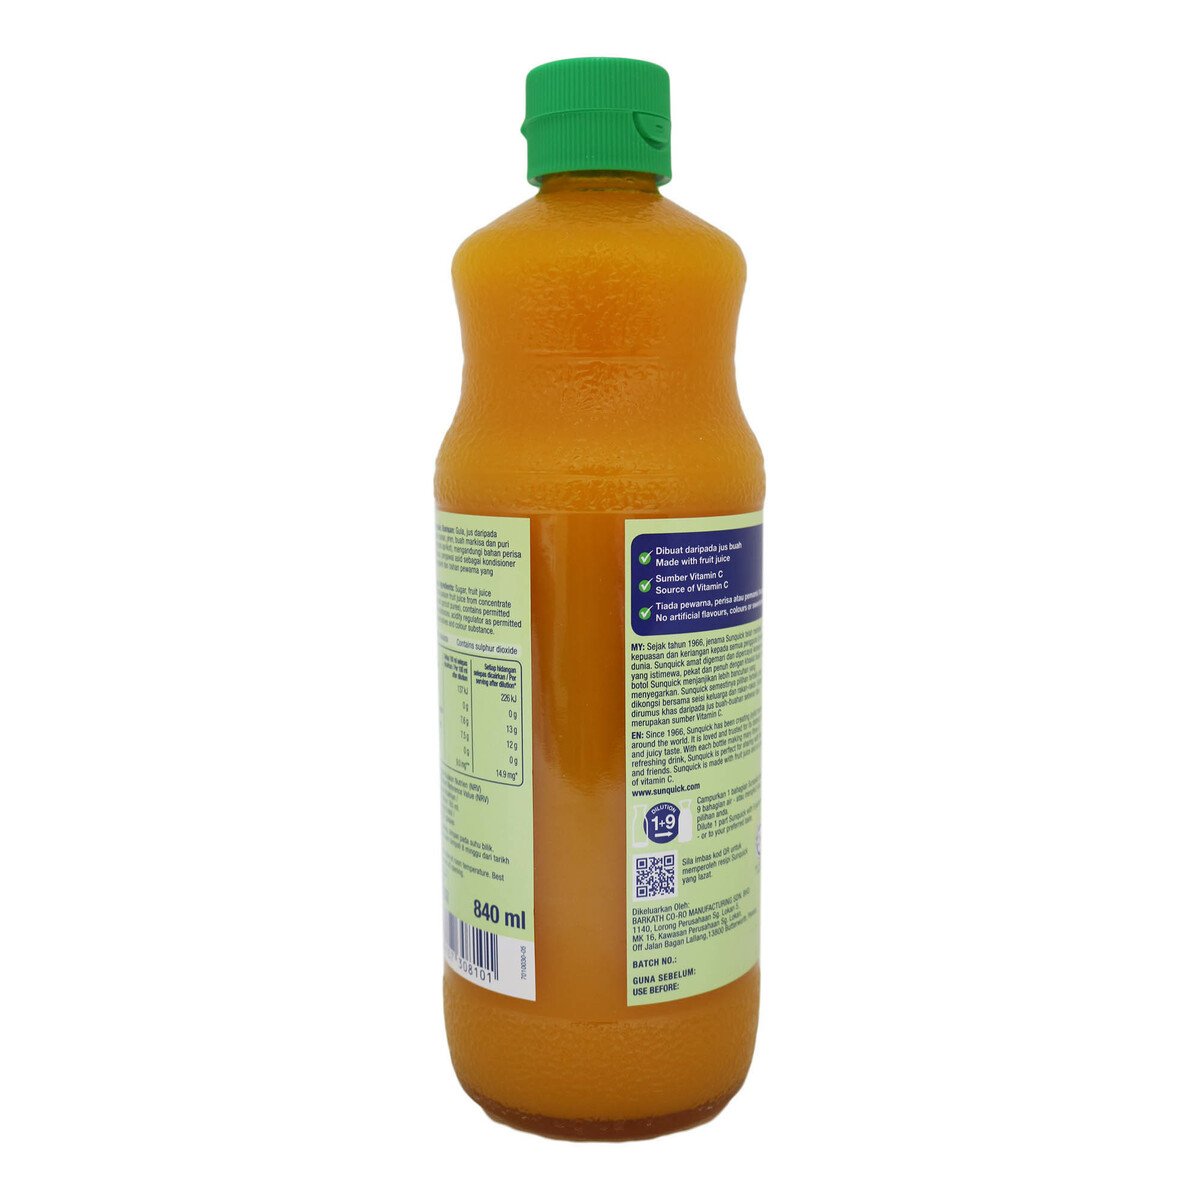 Sunquick Tropical Jumbo Fruit Drink 800ml